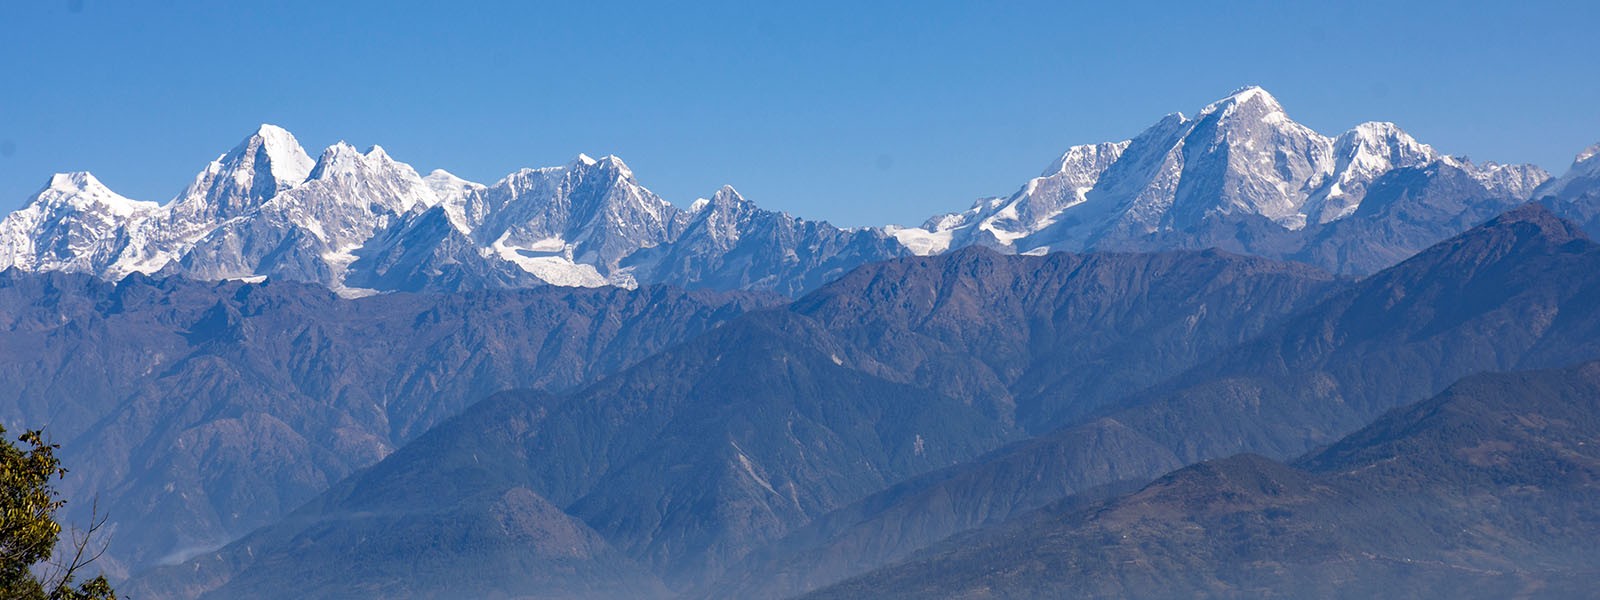 Mt. Dorje Lakpa Climbing